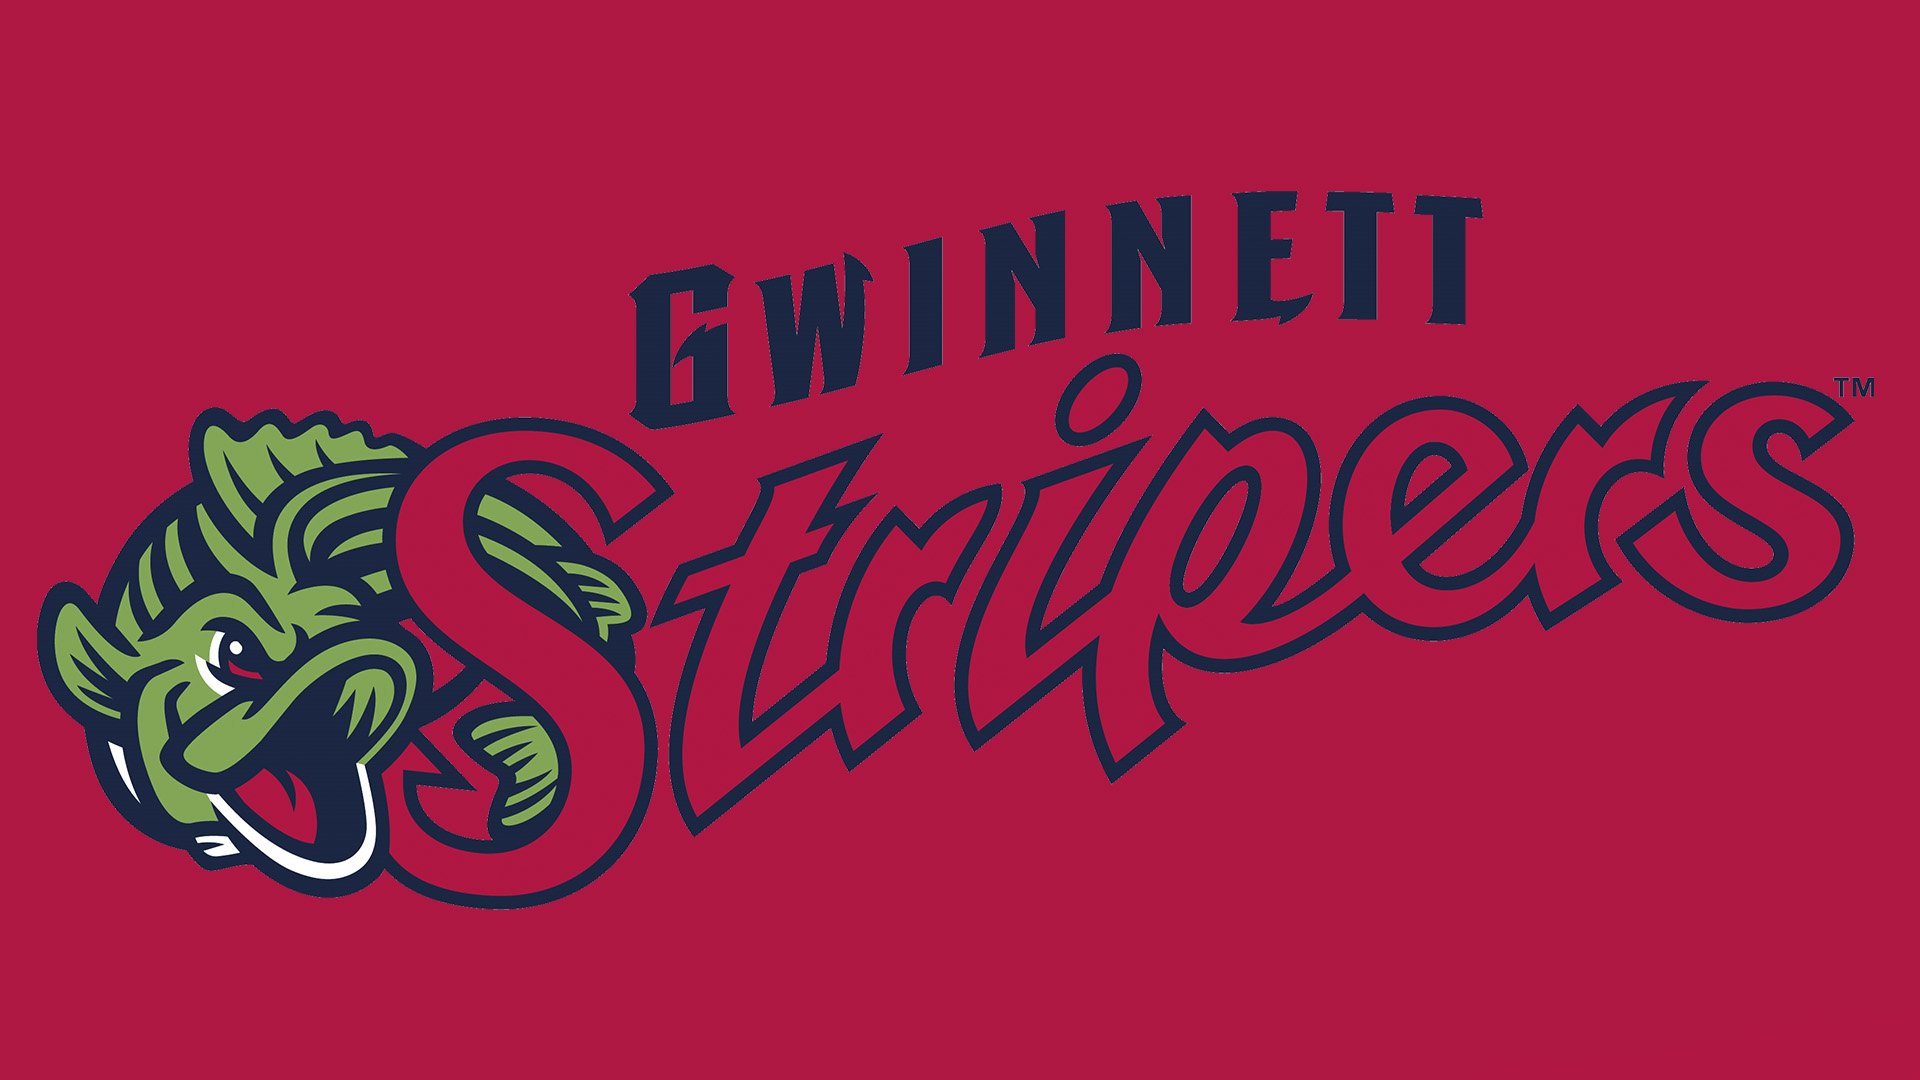 Gwinnett Braves unveil new name, colors, logo